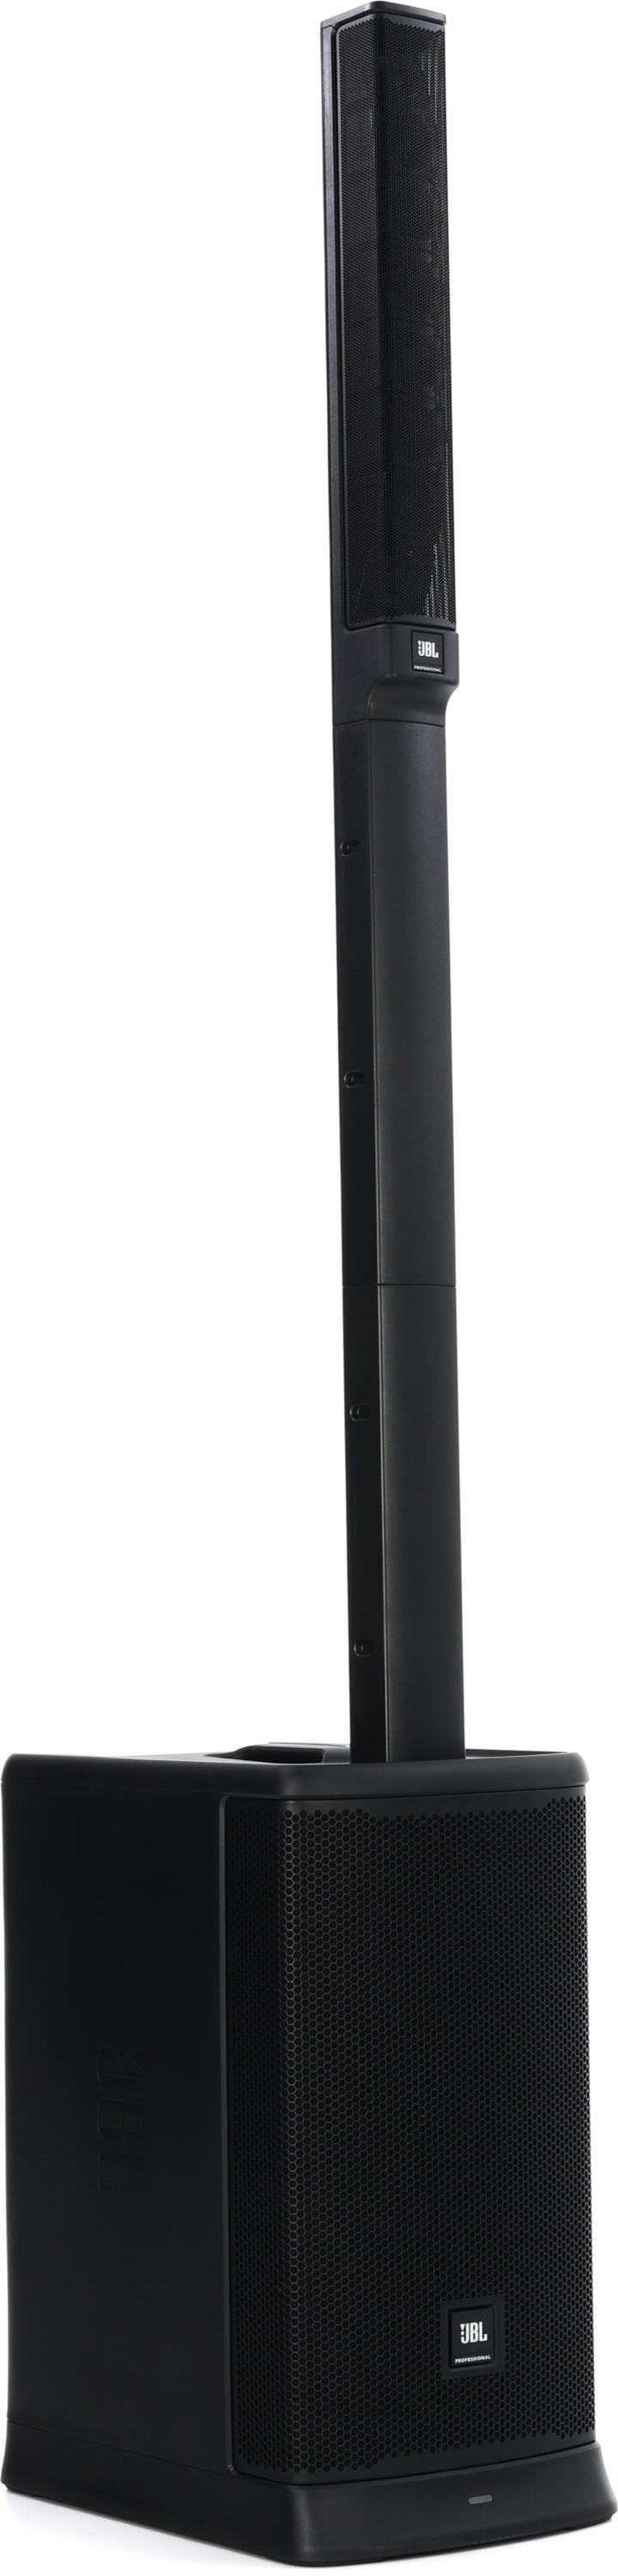 JBL AC299 1000W 12-inch 2-way Full-range Passive Loudspeaker - Black